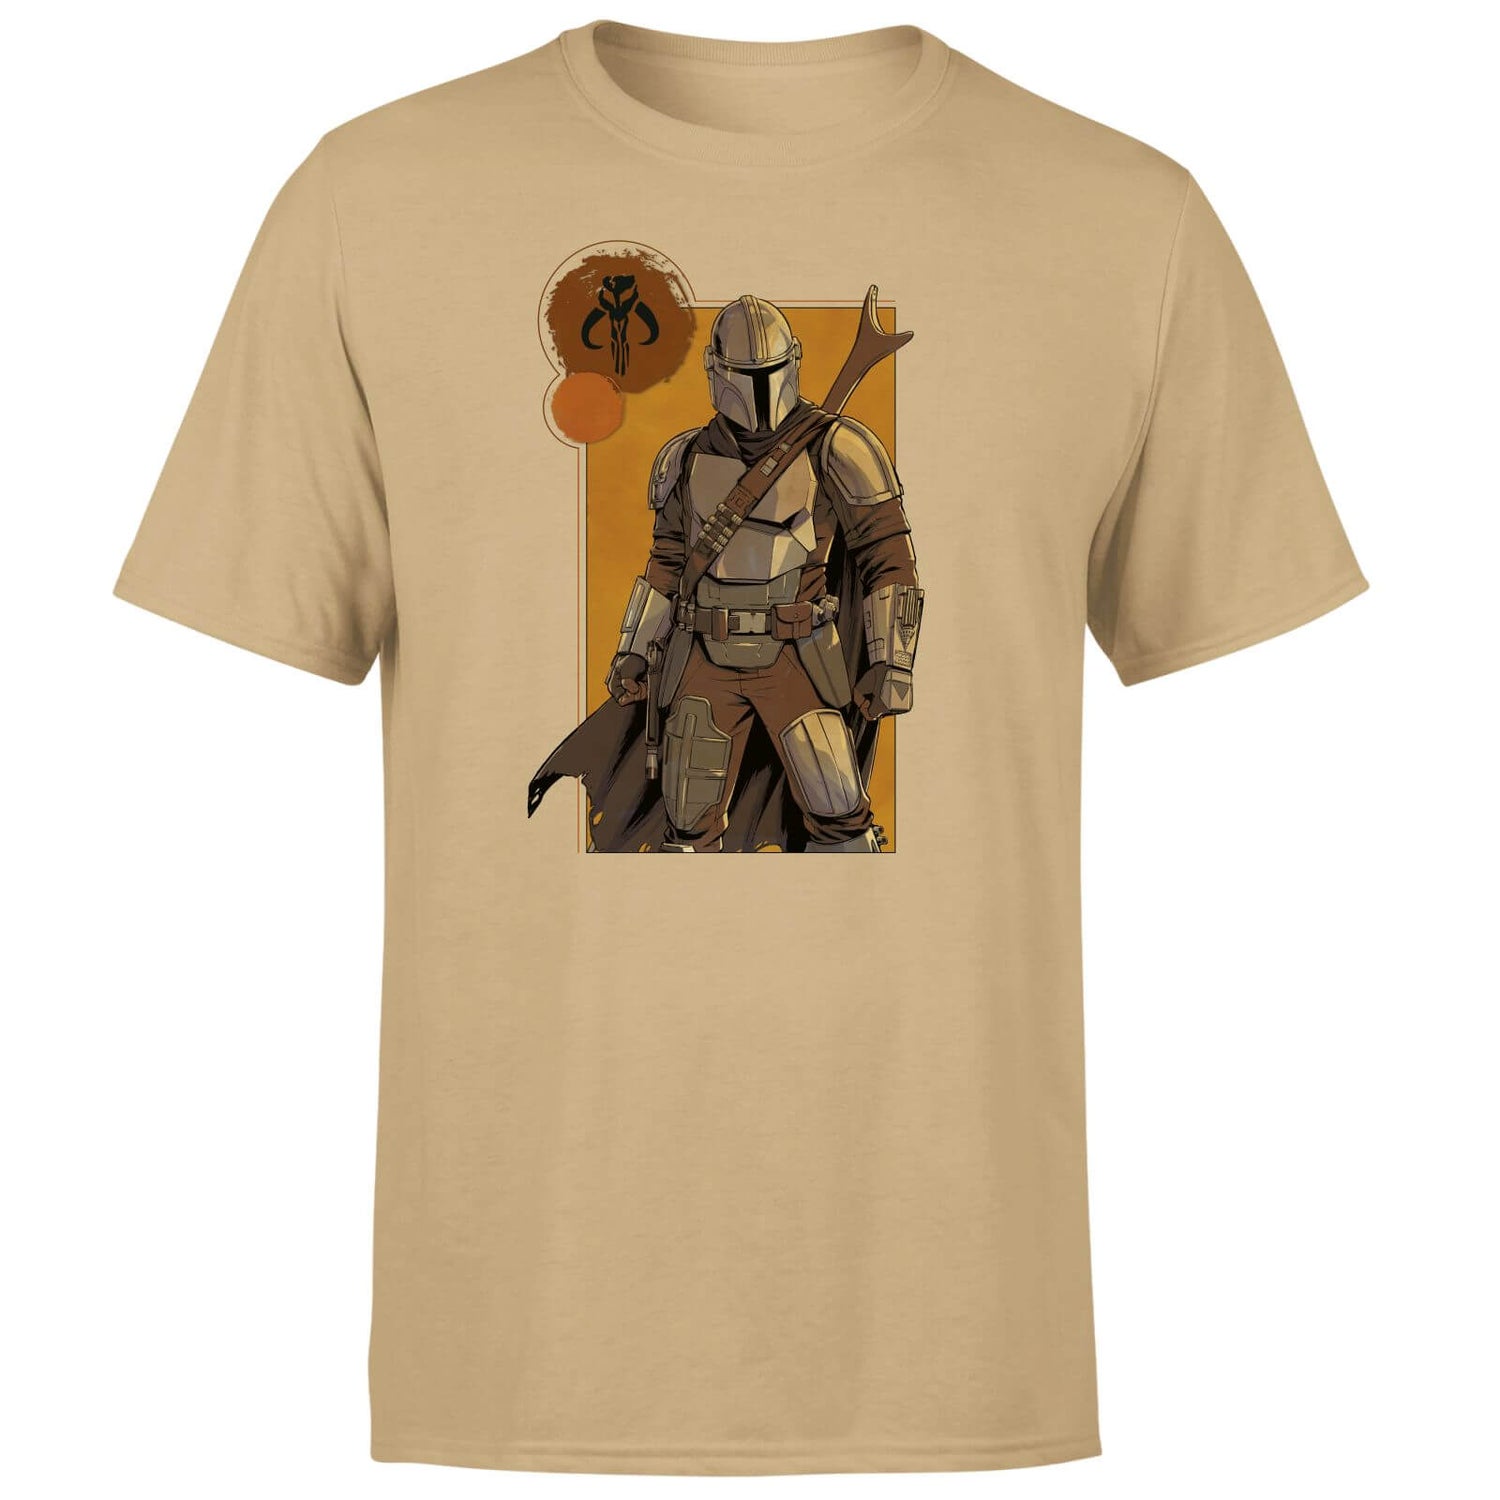 Star Wars The Mandalorian Composition Men's T-Shirt - Tan